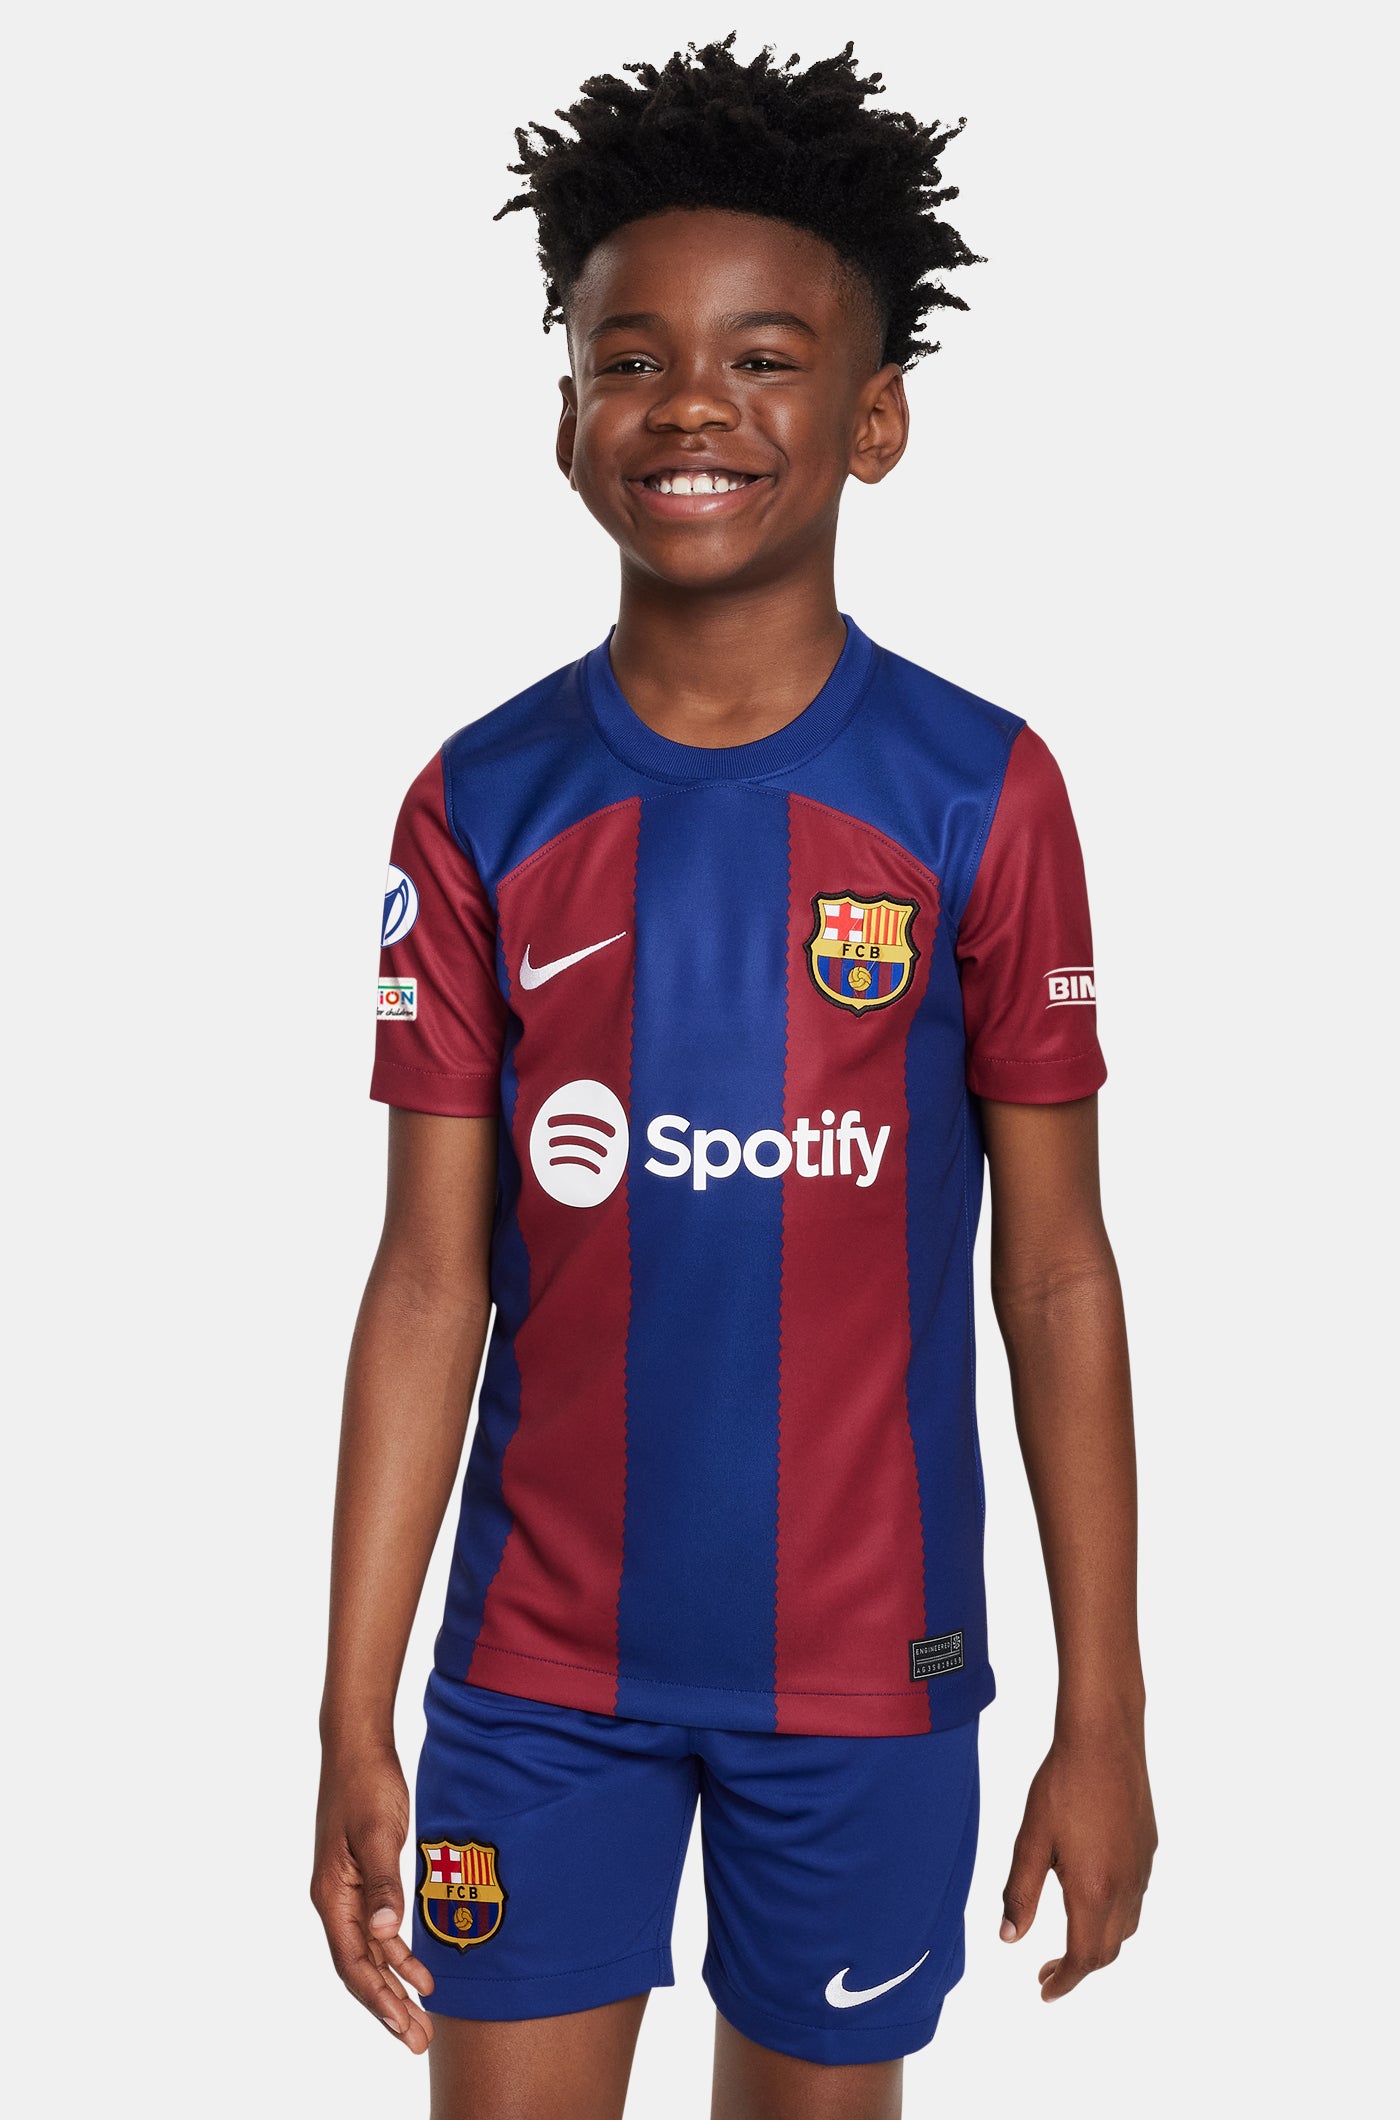 UWCL FC Barcelona home shirt 23/24 - Junior - PINA